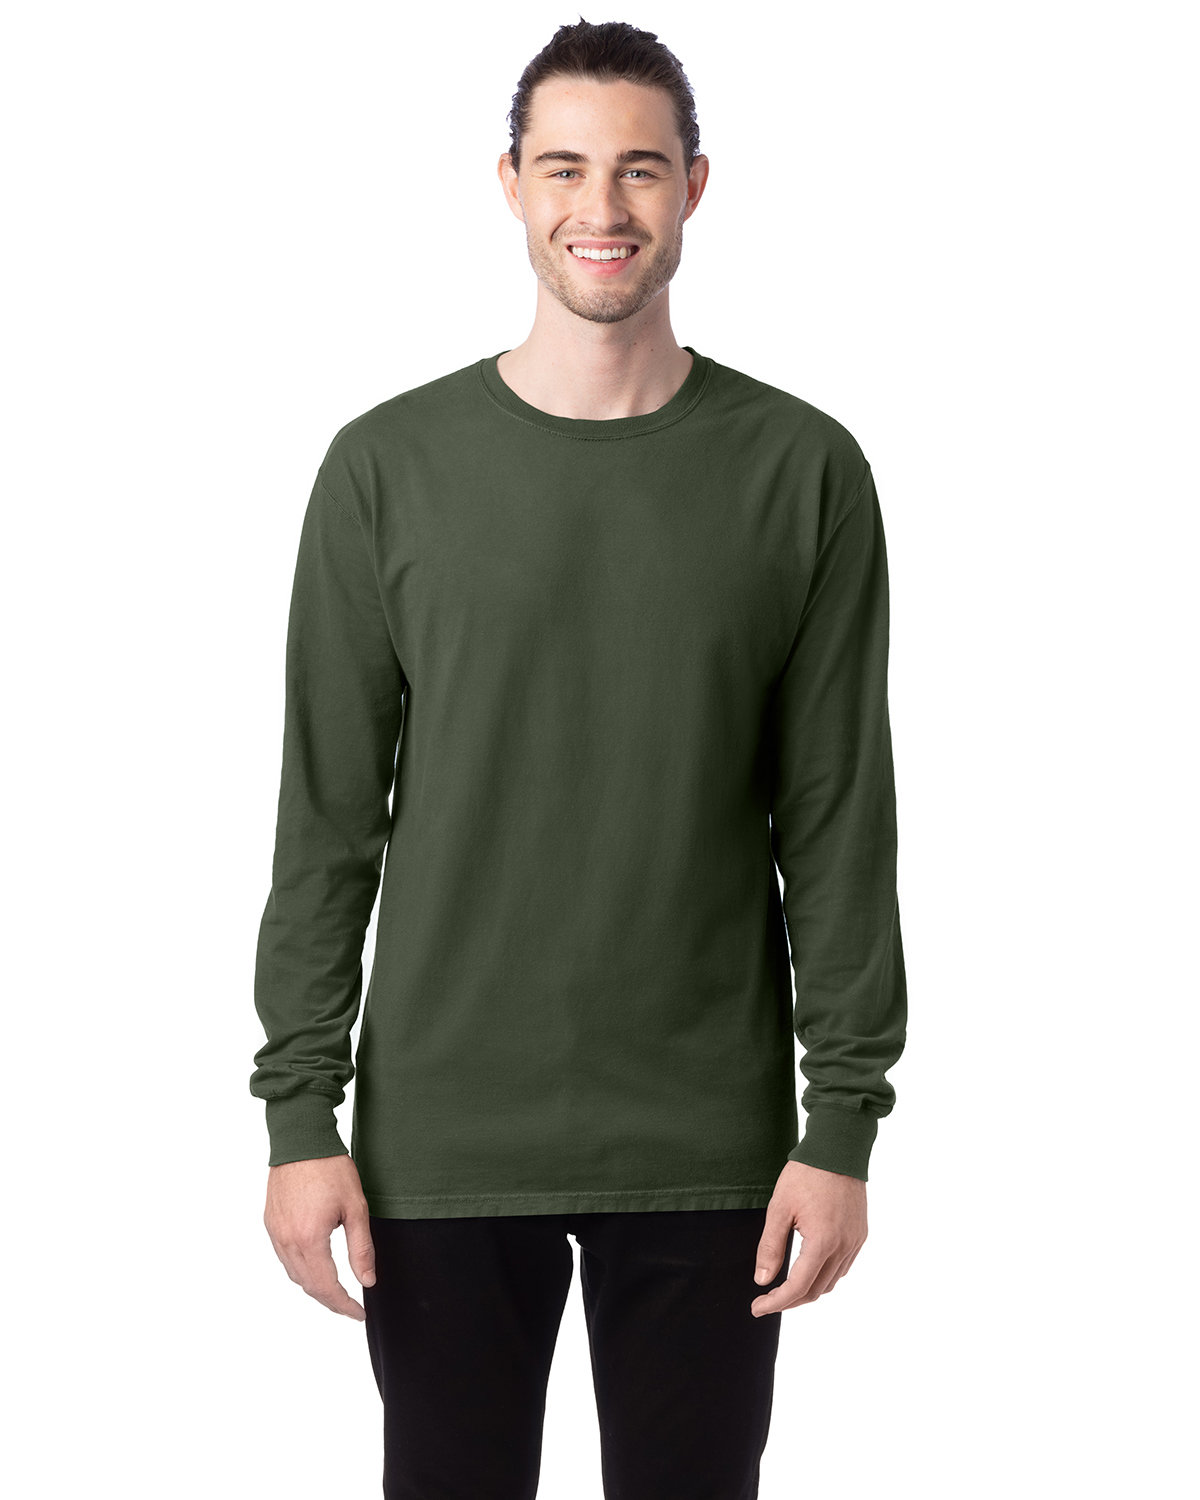 ComfortWash by Hanes Unisex Garment-Dyed Long-Sleeve T-Shirt MOSS 